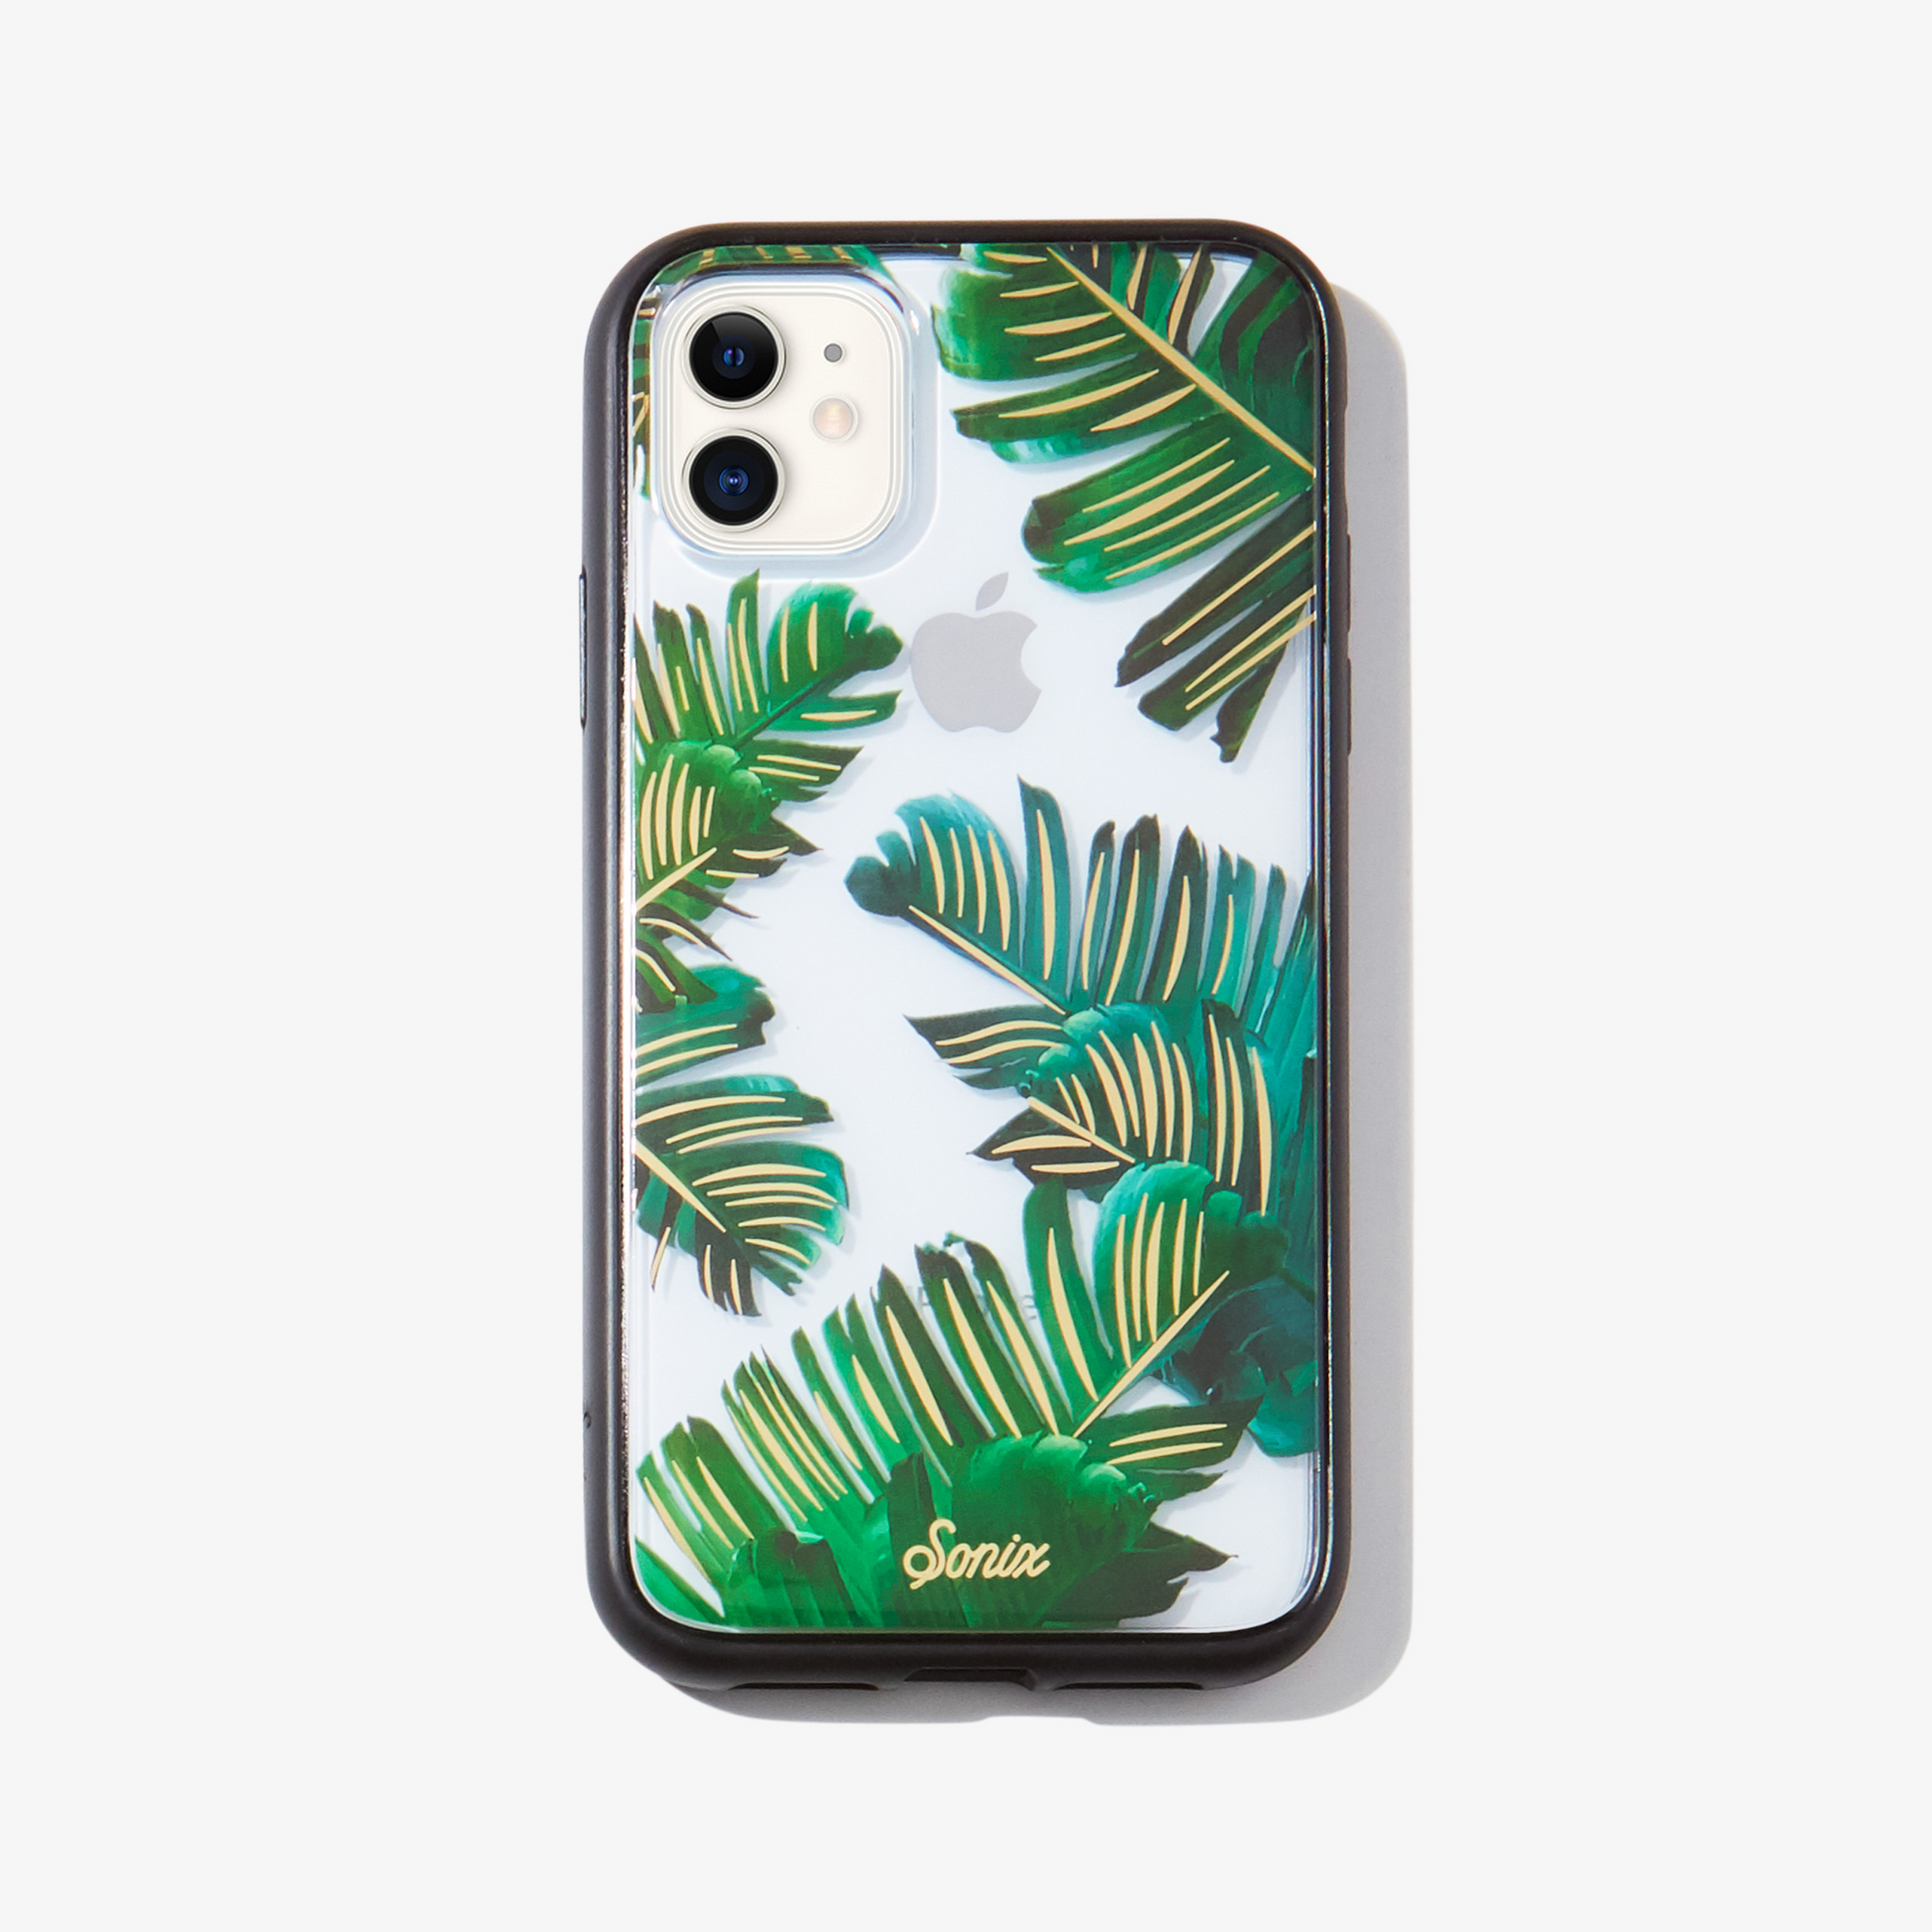 Bahama palm leaves iPhone 11 phone case on white phone.